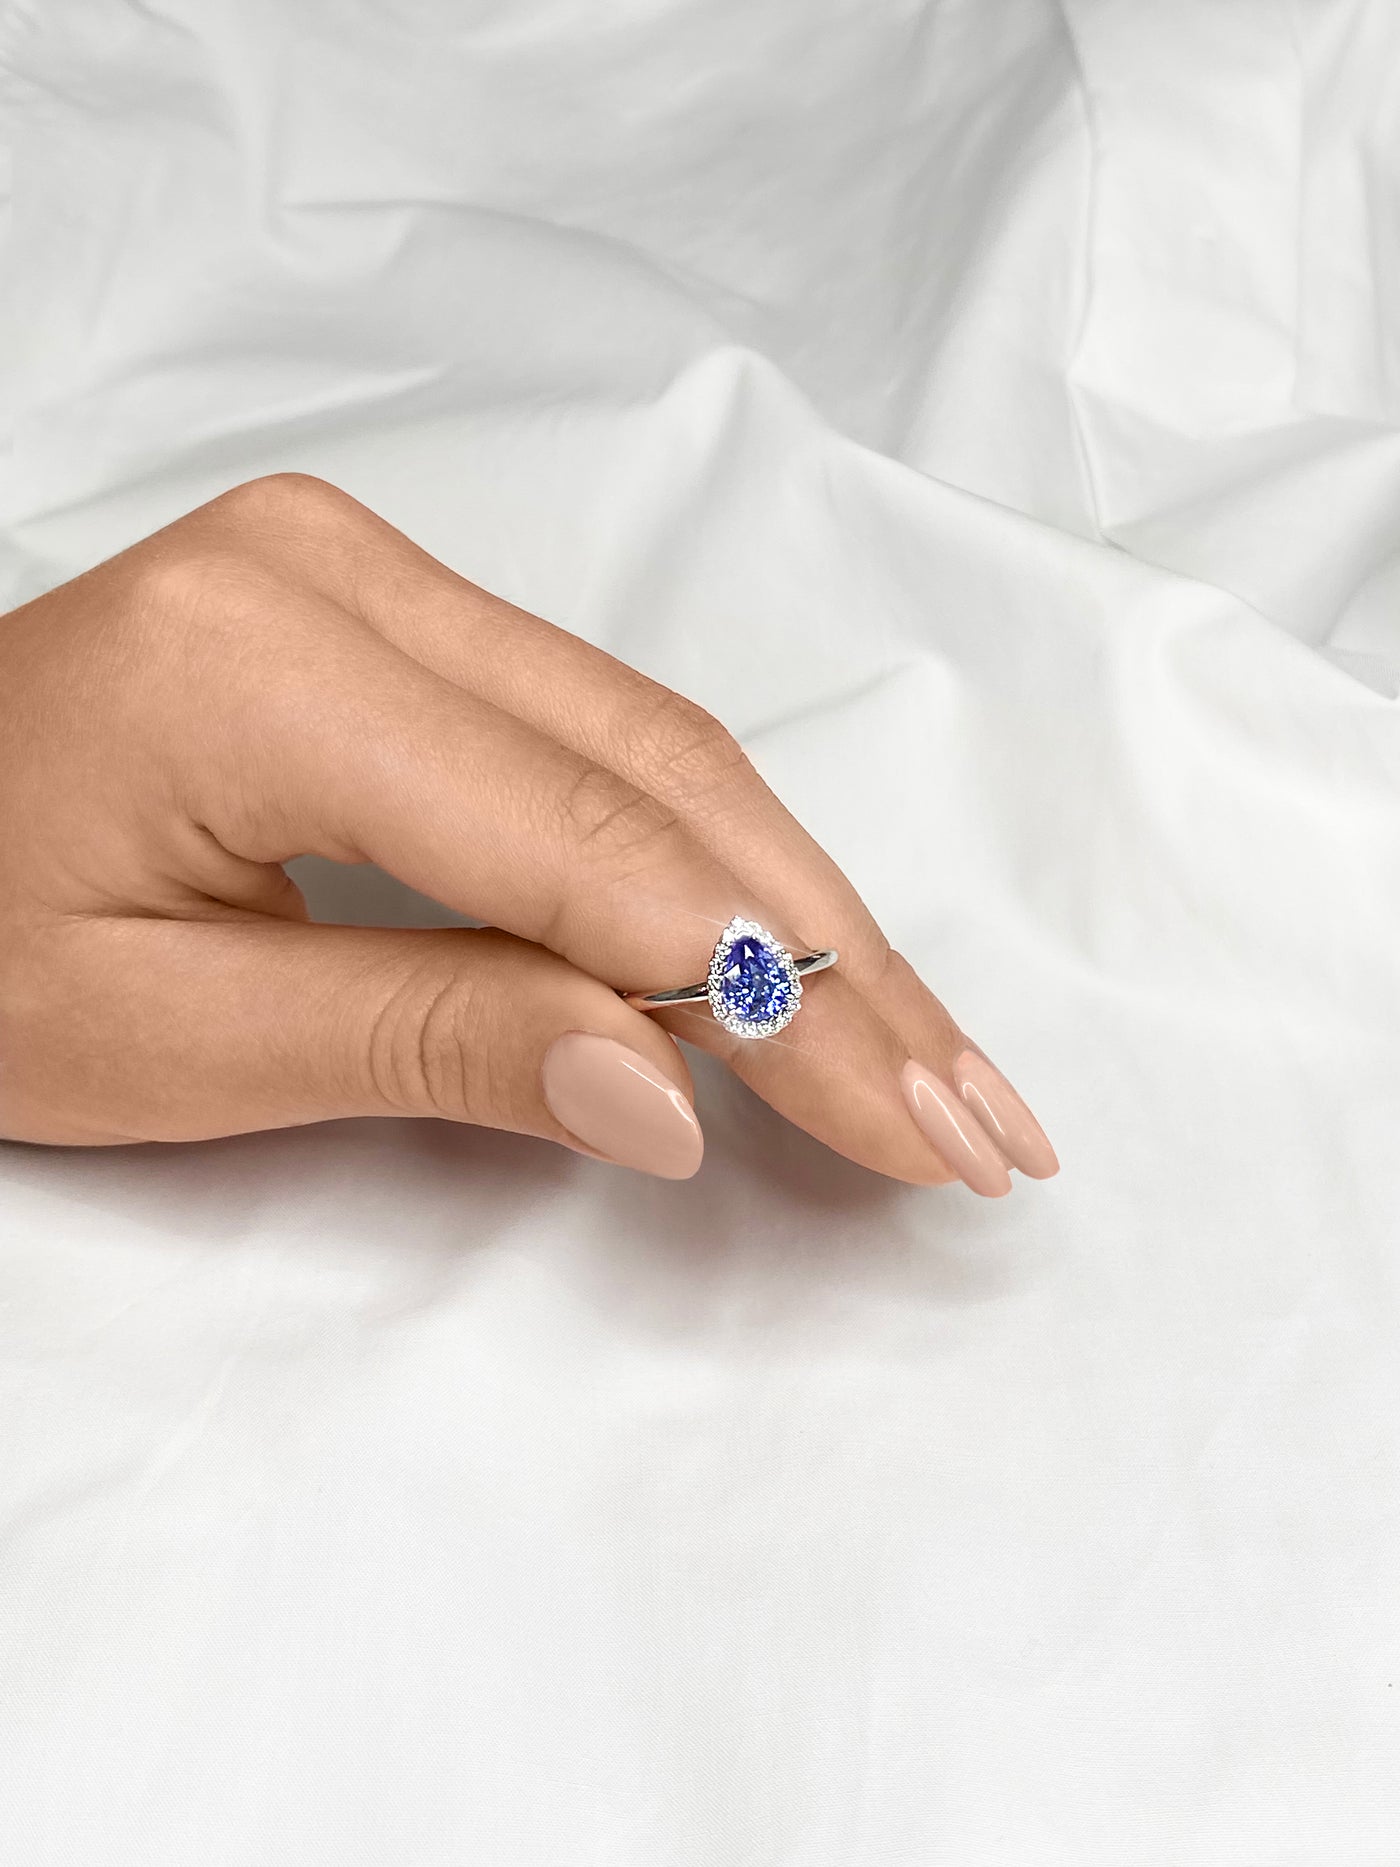 18ct pear shaped ceylon sapphire and diamond ring on hand